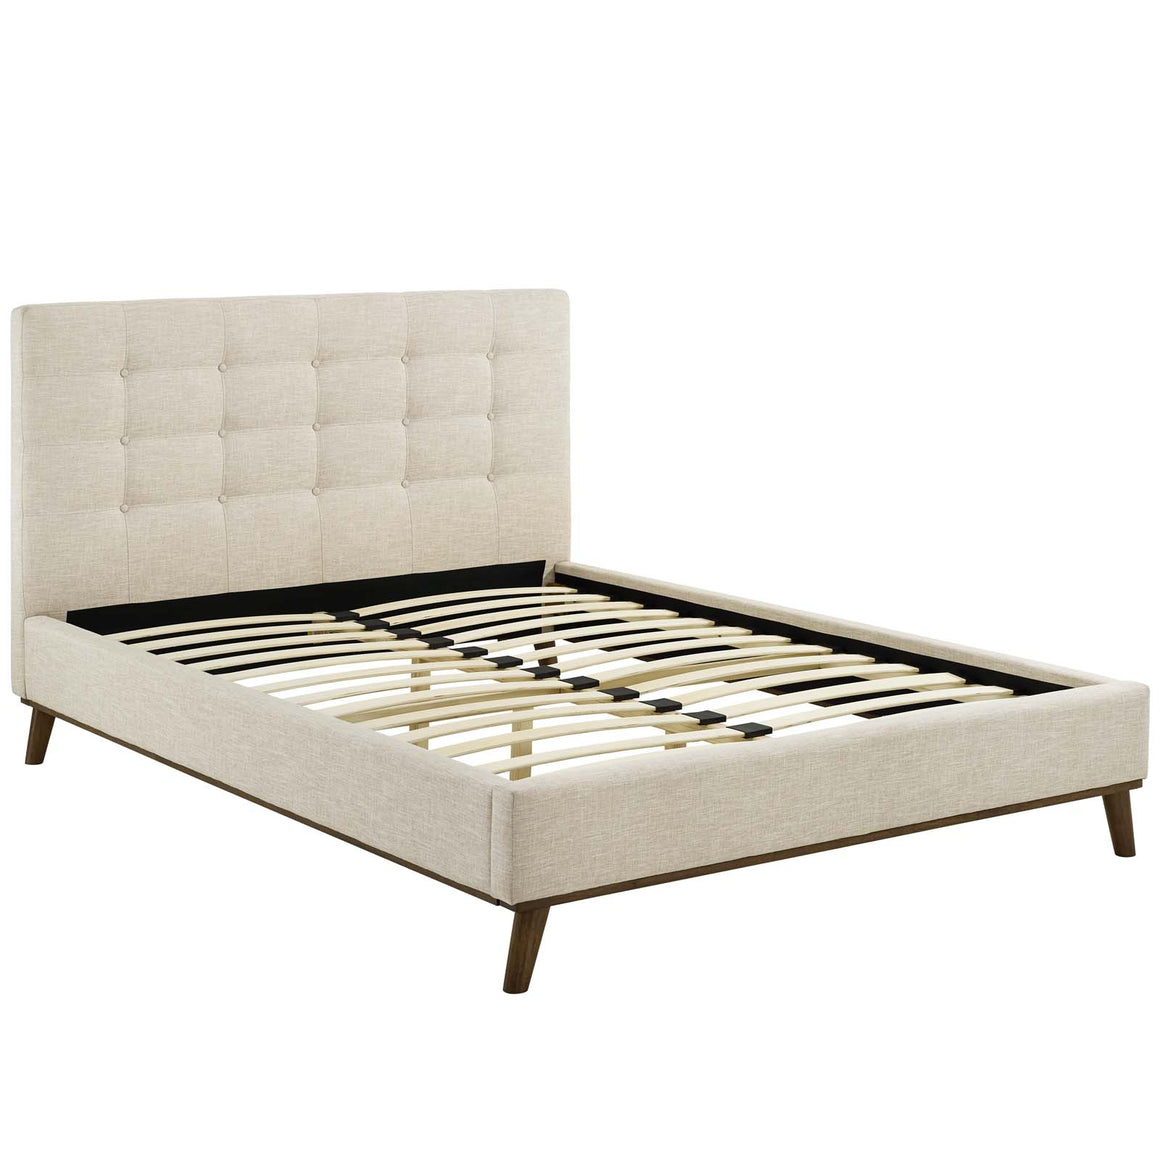 McKenzie Biscuit Tufted Upholstered Fabric Platform Bed